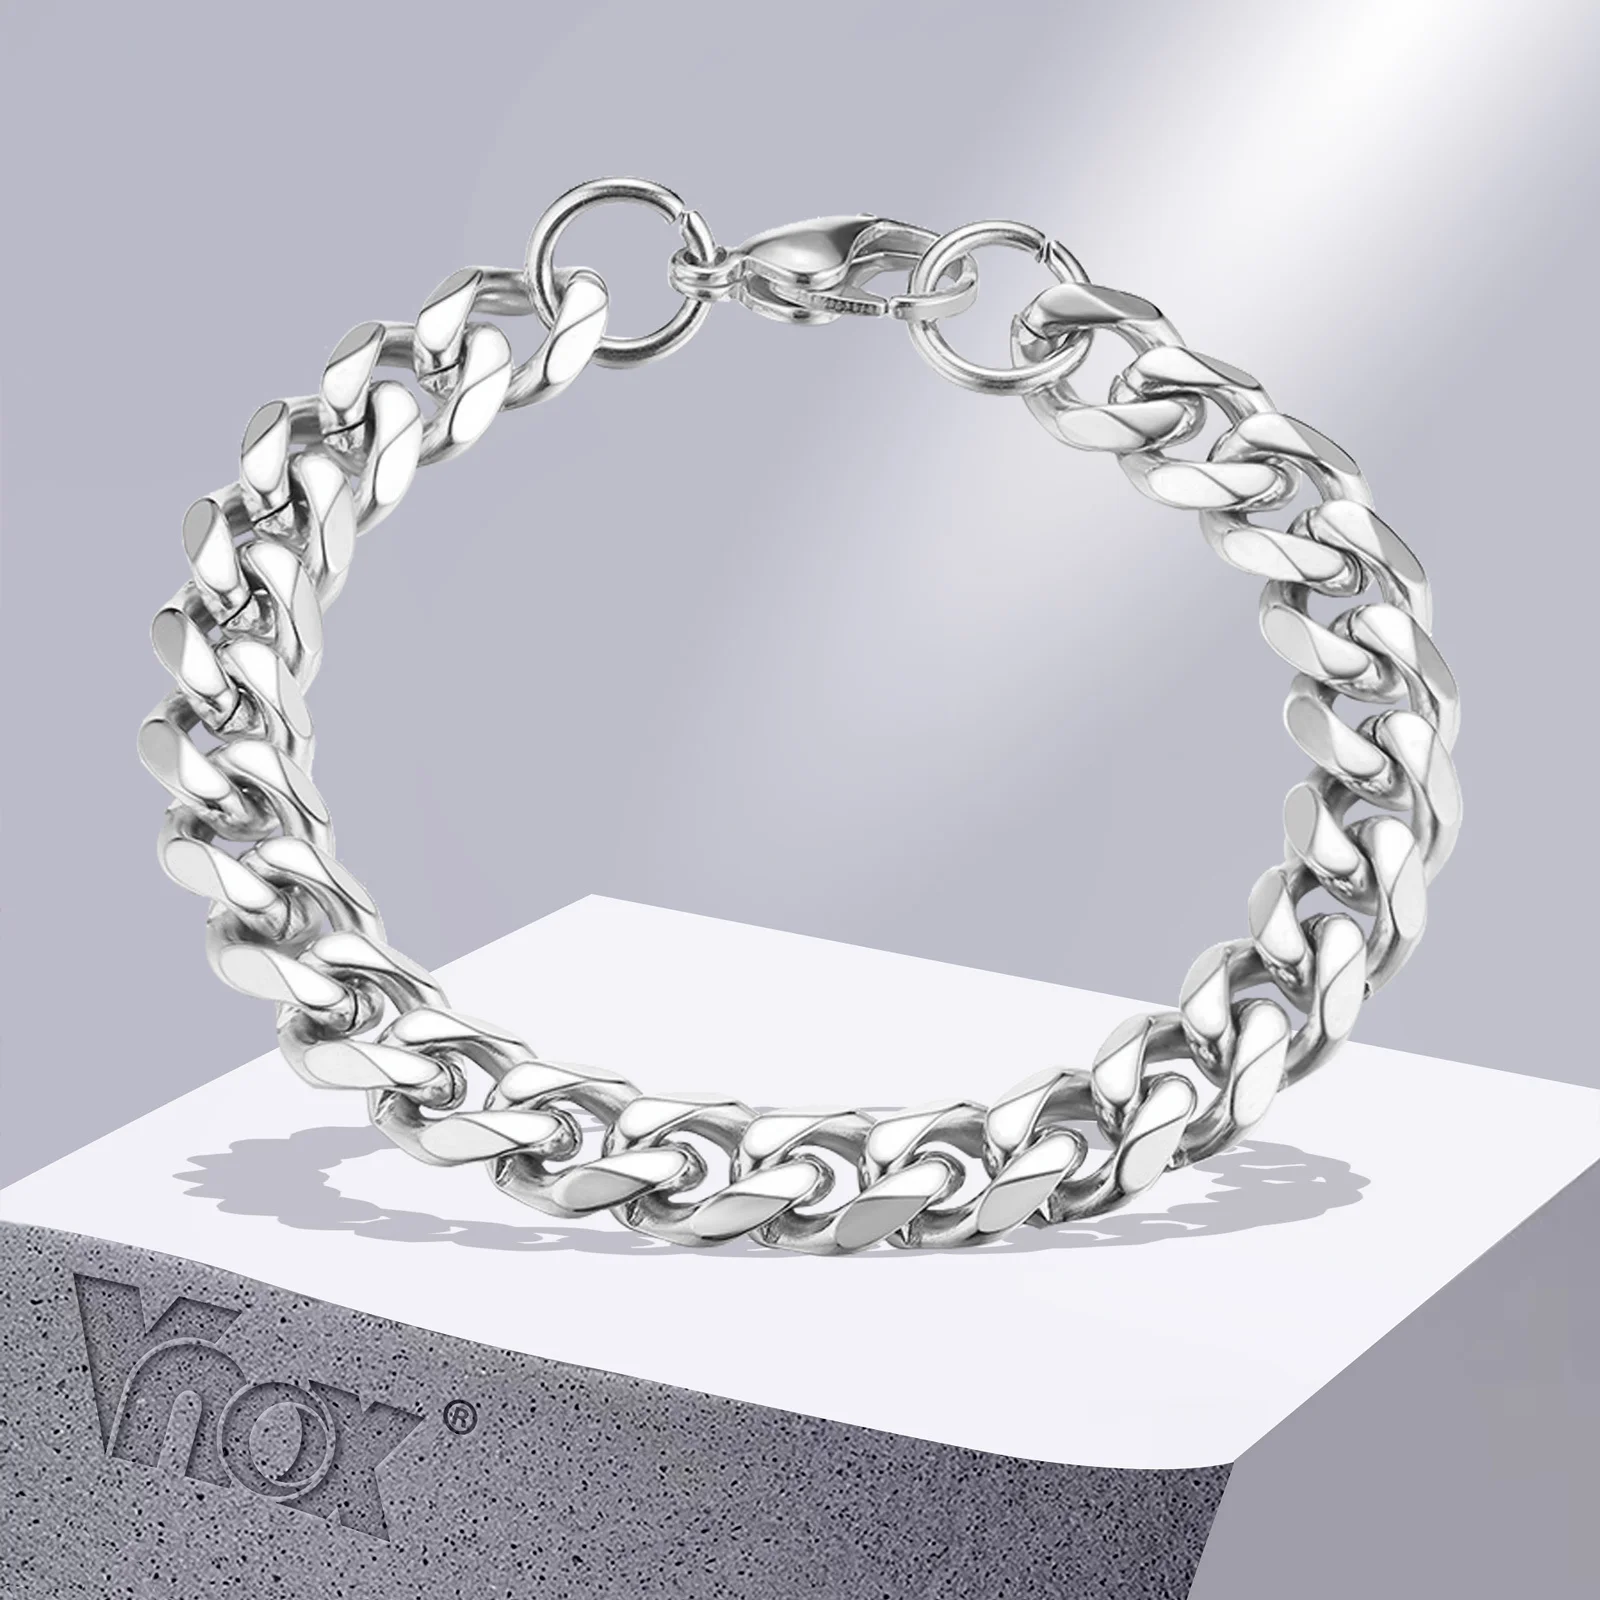 Vnox Solid Stainless Steel Bracelets for Men Women Black Gold Color Metal Punk Casual Curb Cuban Link Chain Bracelets